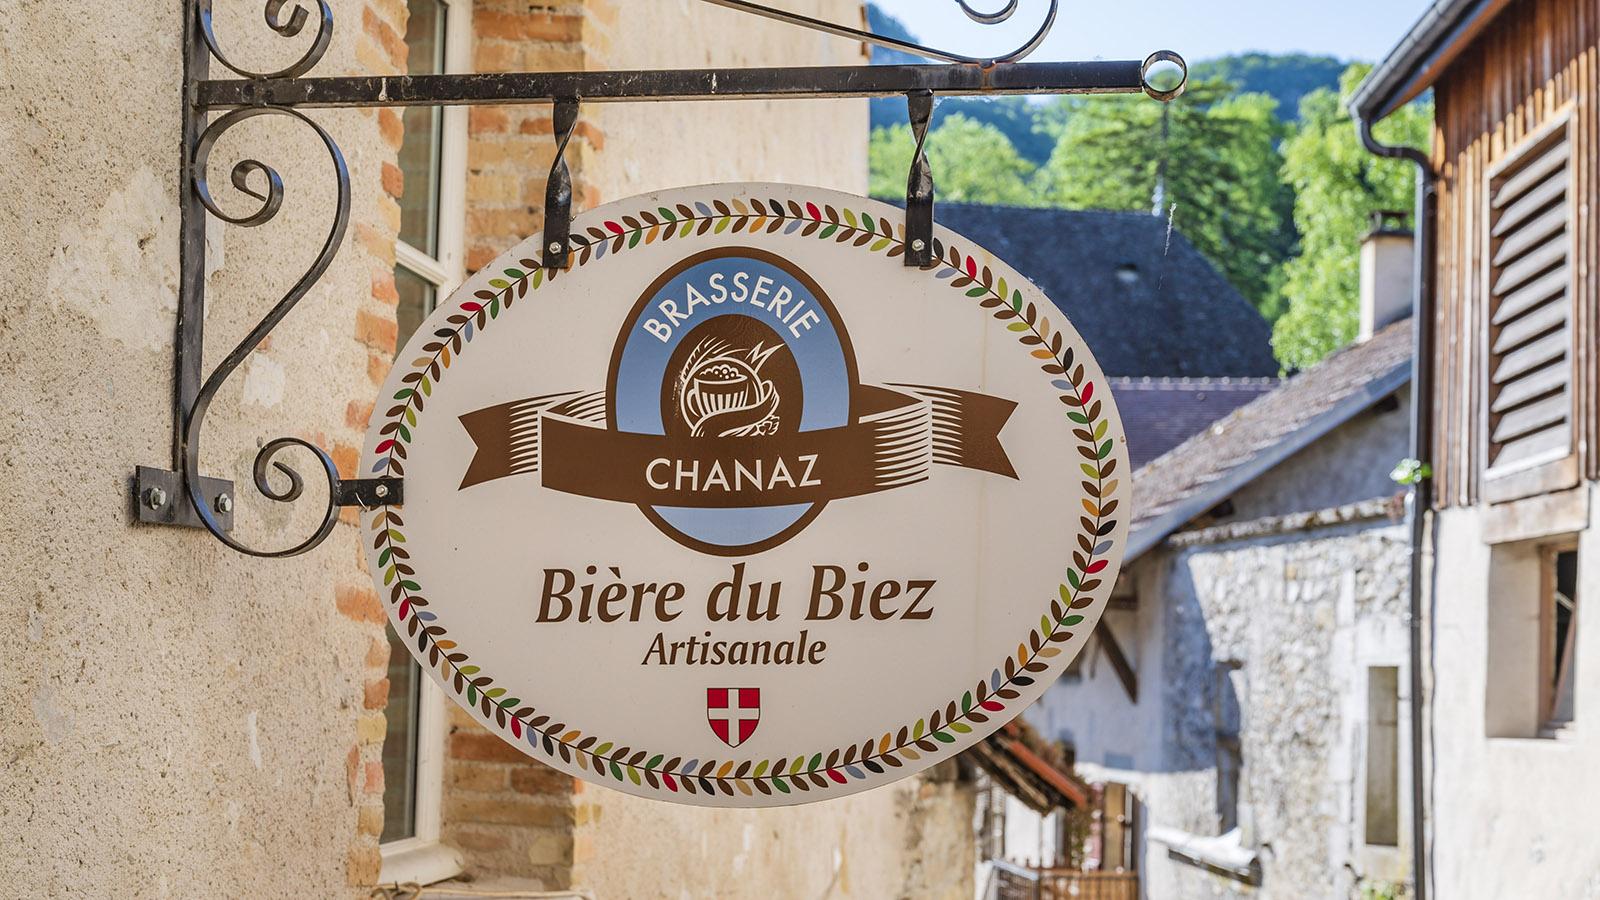 Chanaz, Savoie. Foto: Hilke Maunder